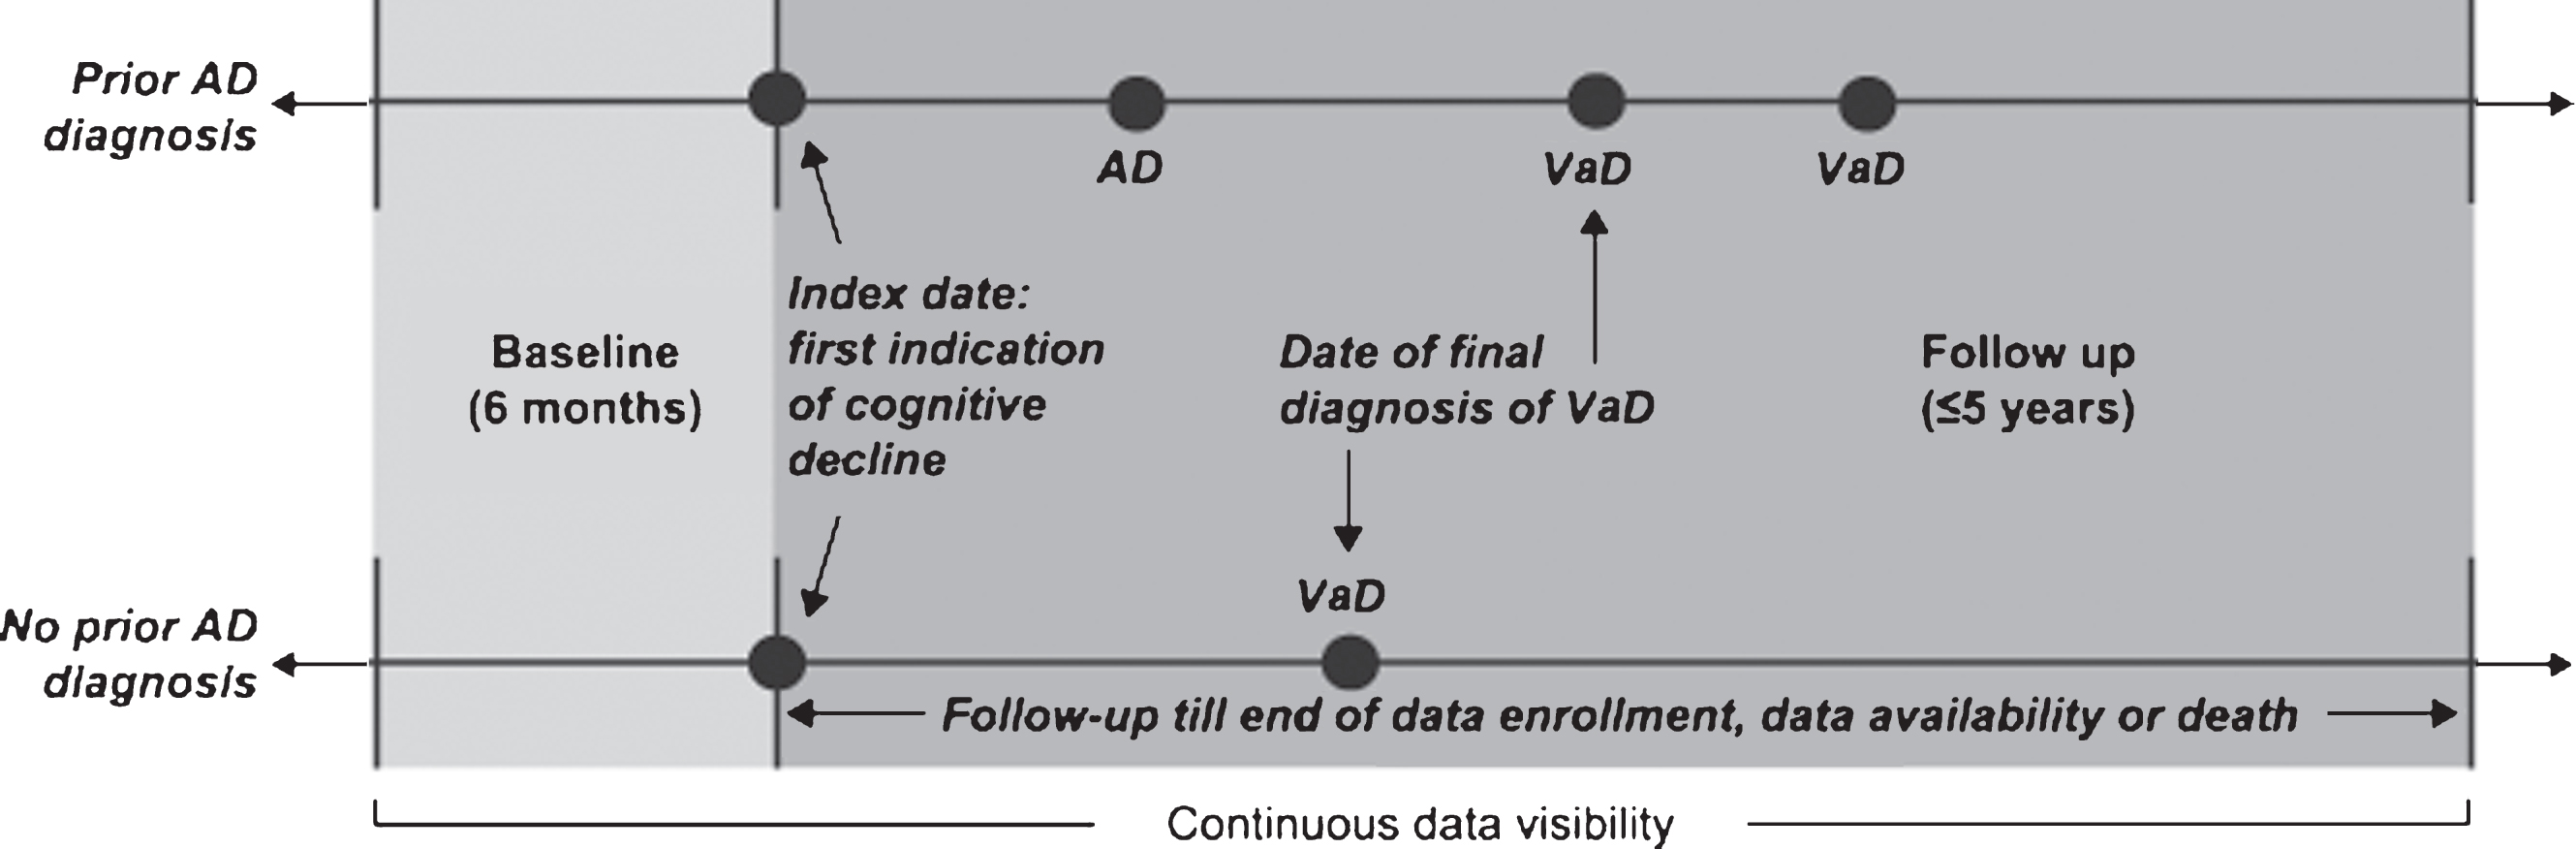 Study design. AD, Alzheimer’s disease; VaD, vascular dementia.